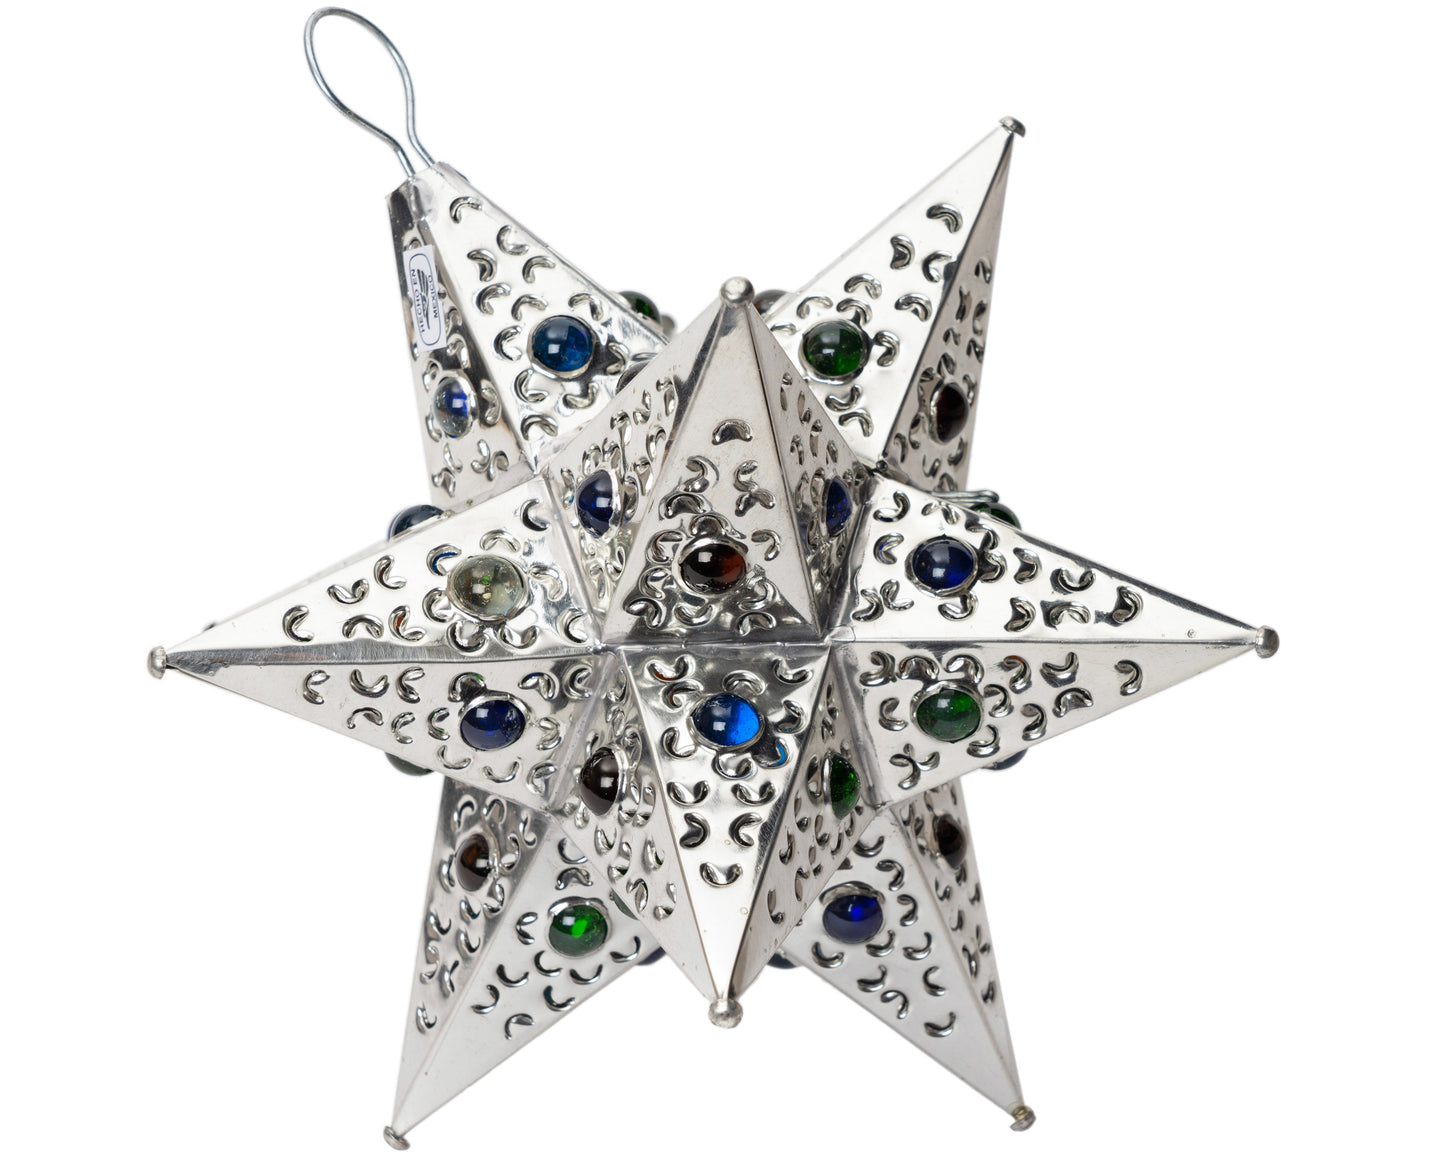 Tin & Marbles "Estrella" Star Suncatcher Small